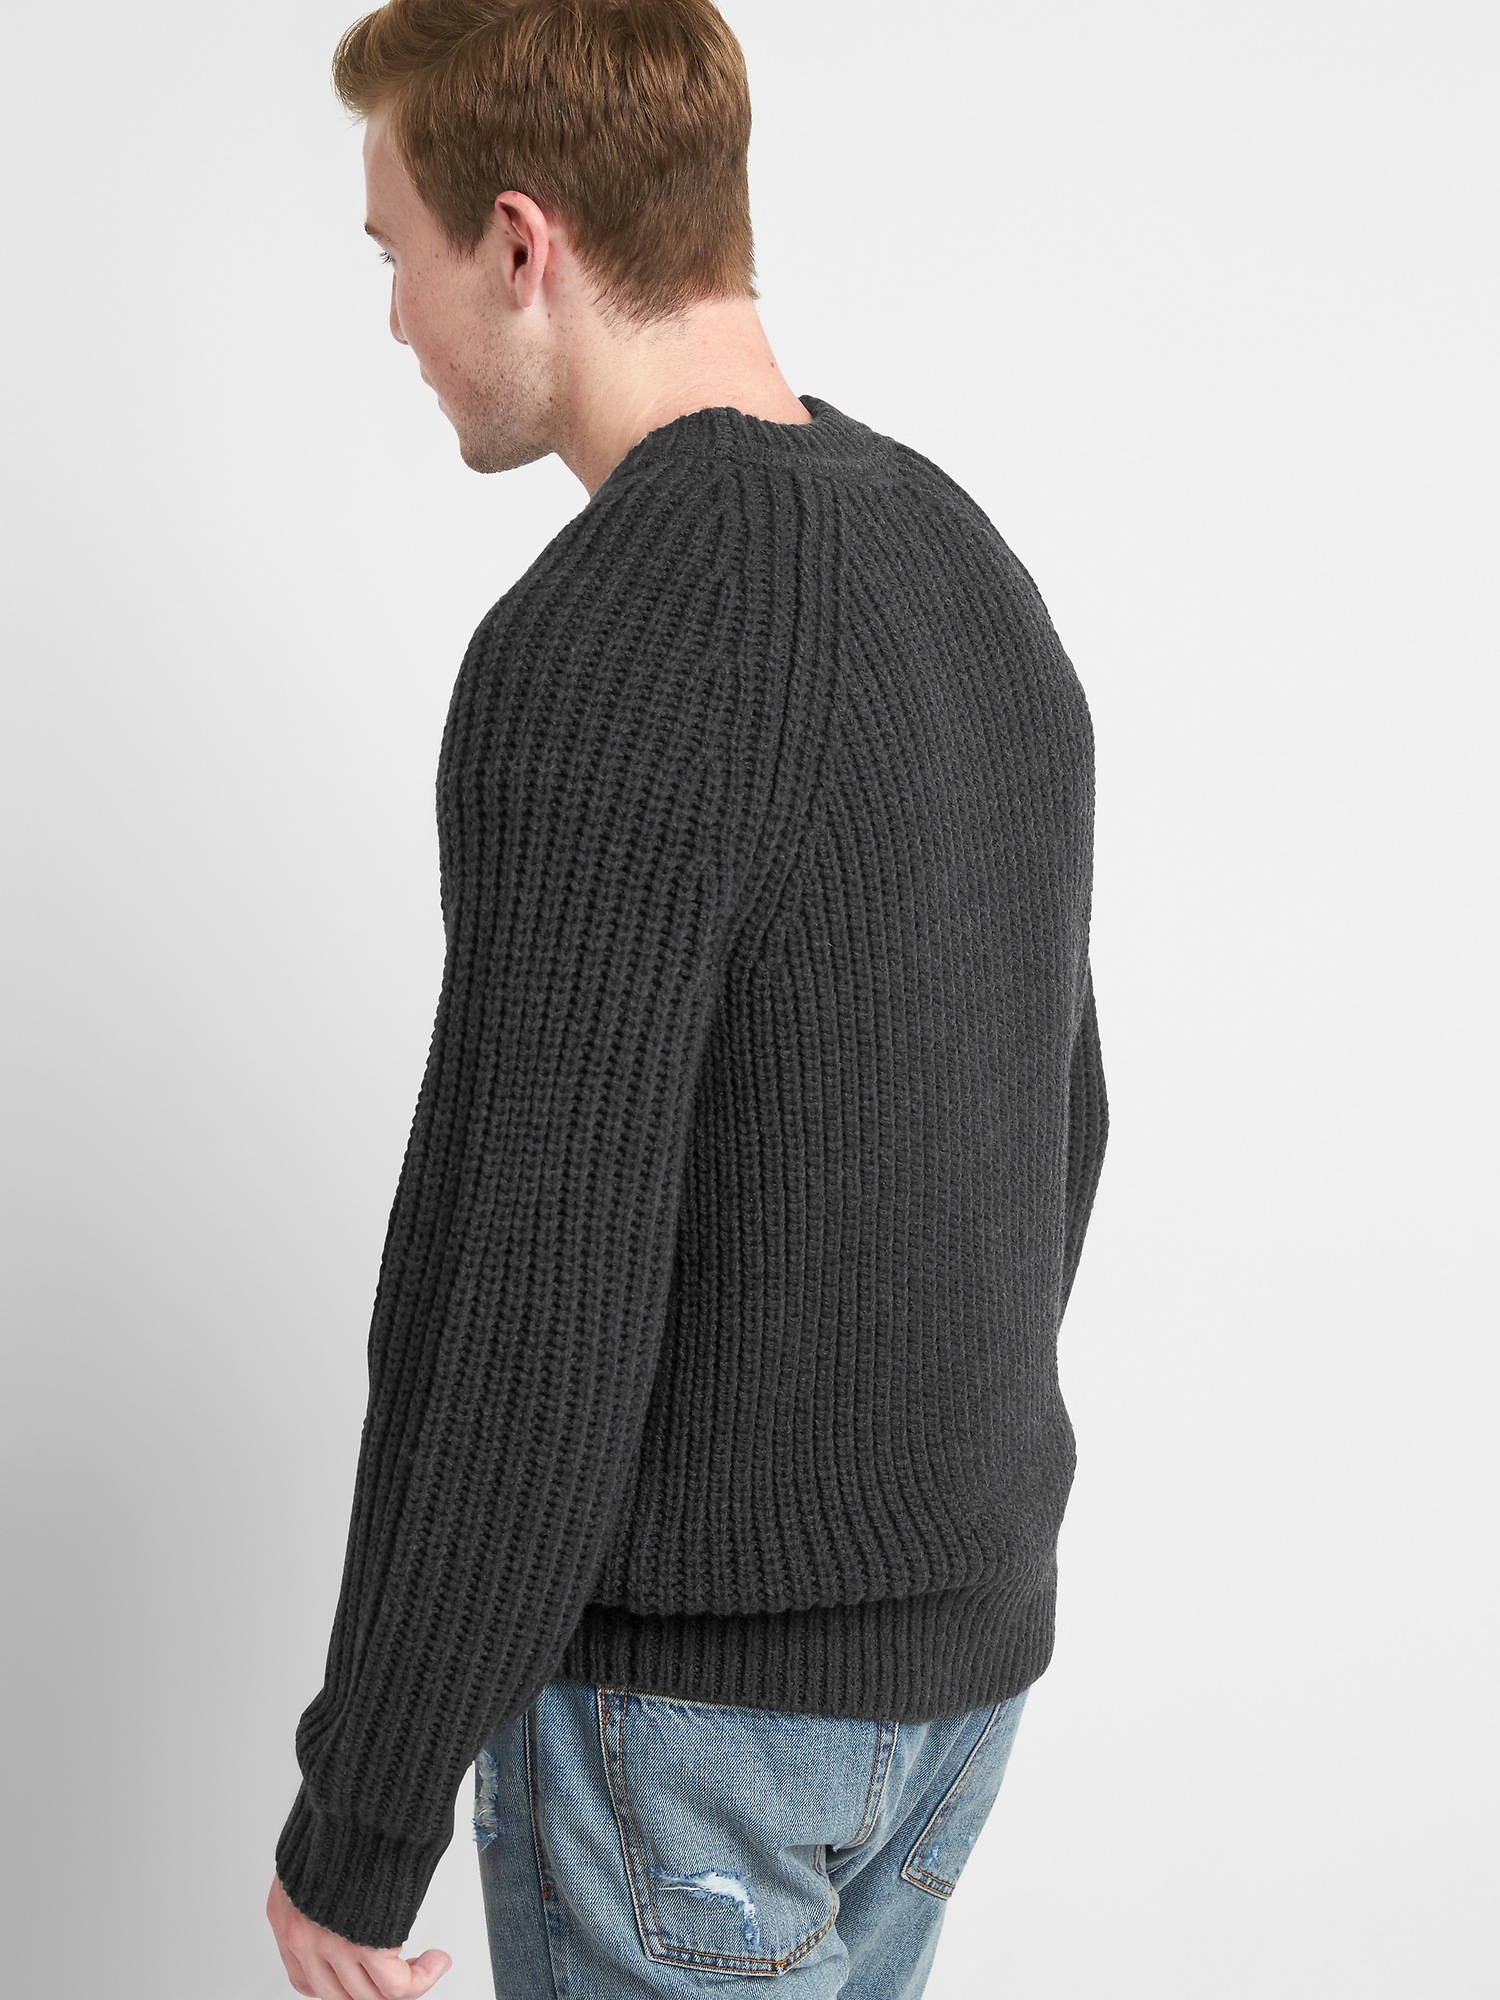 Wool blend ribbed crewneck sweater | Gap